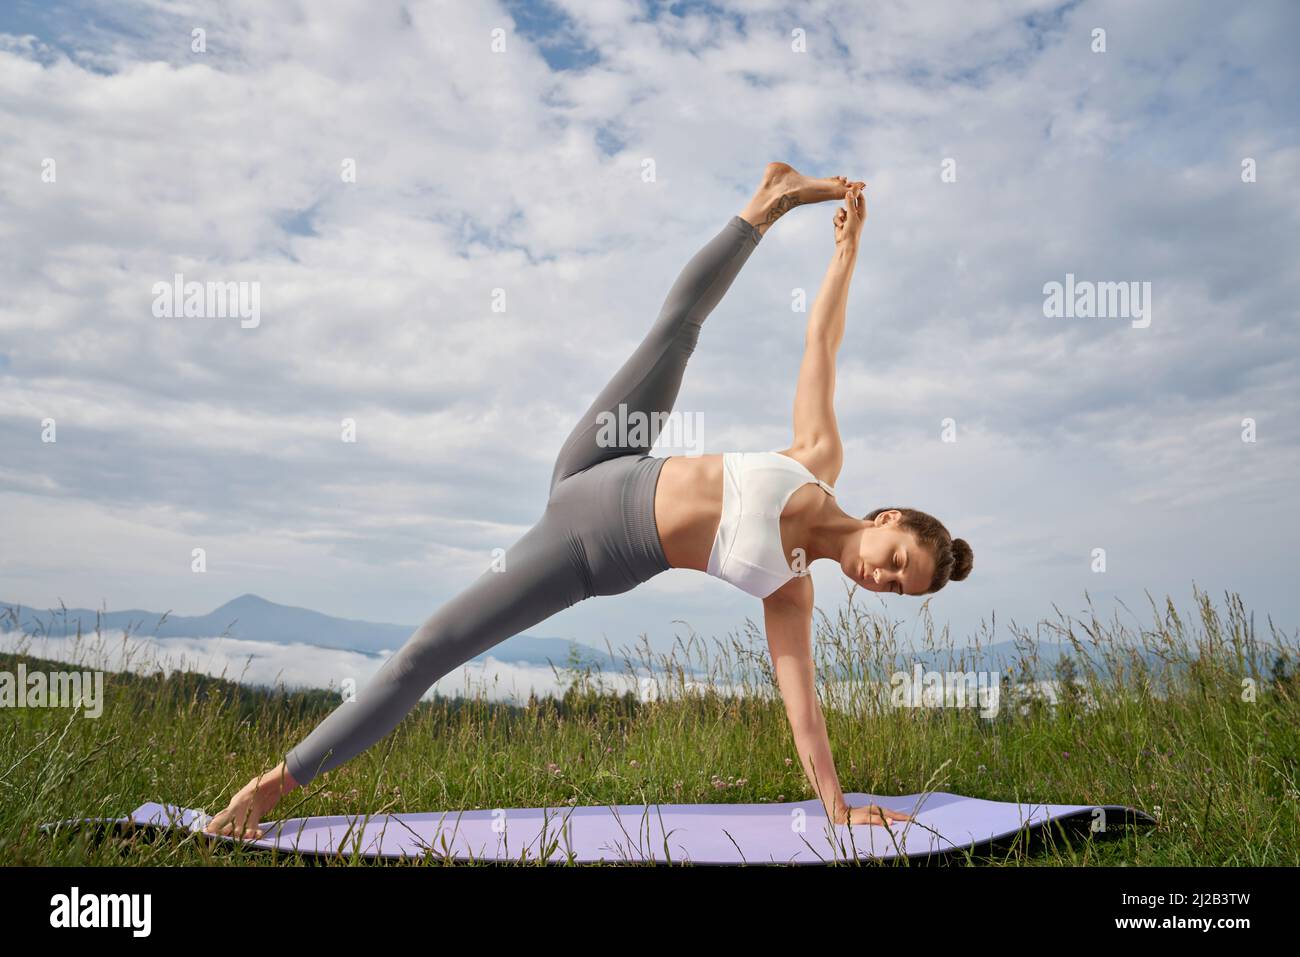 Pastel Chakra Yoga Leggings